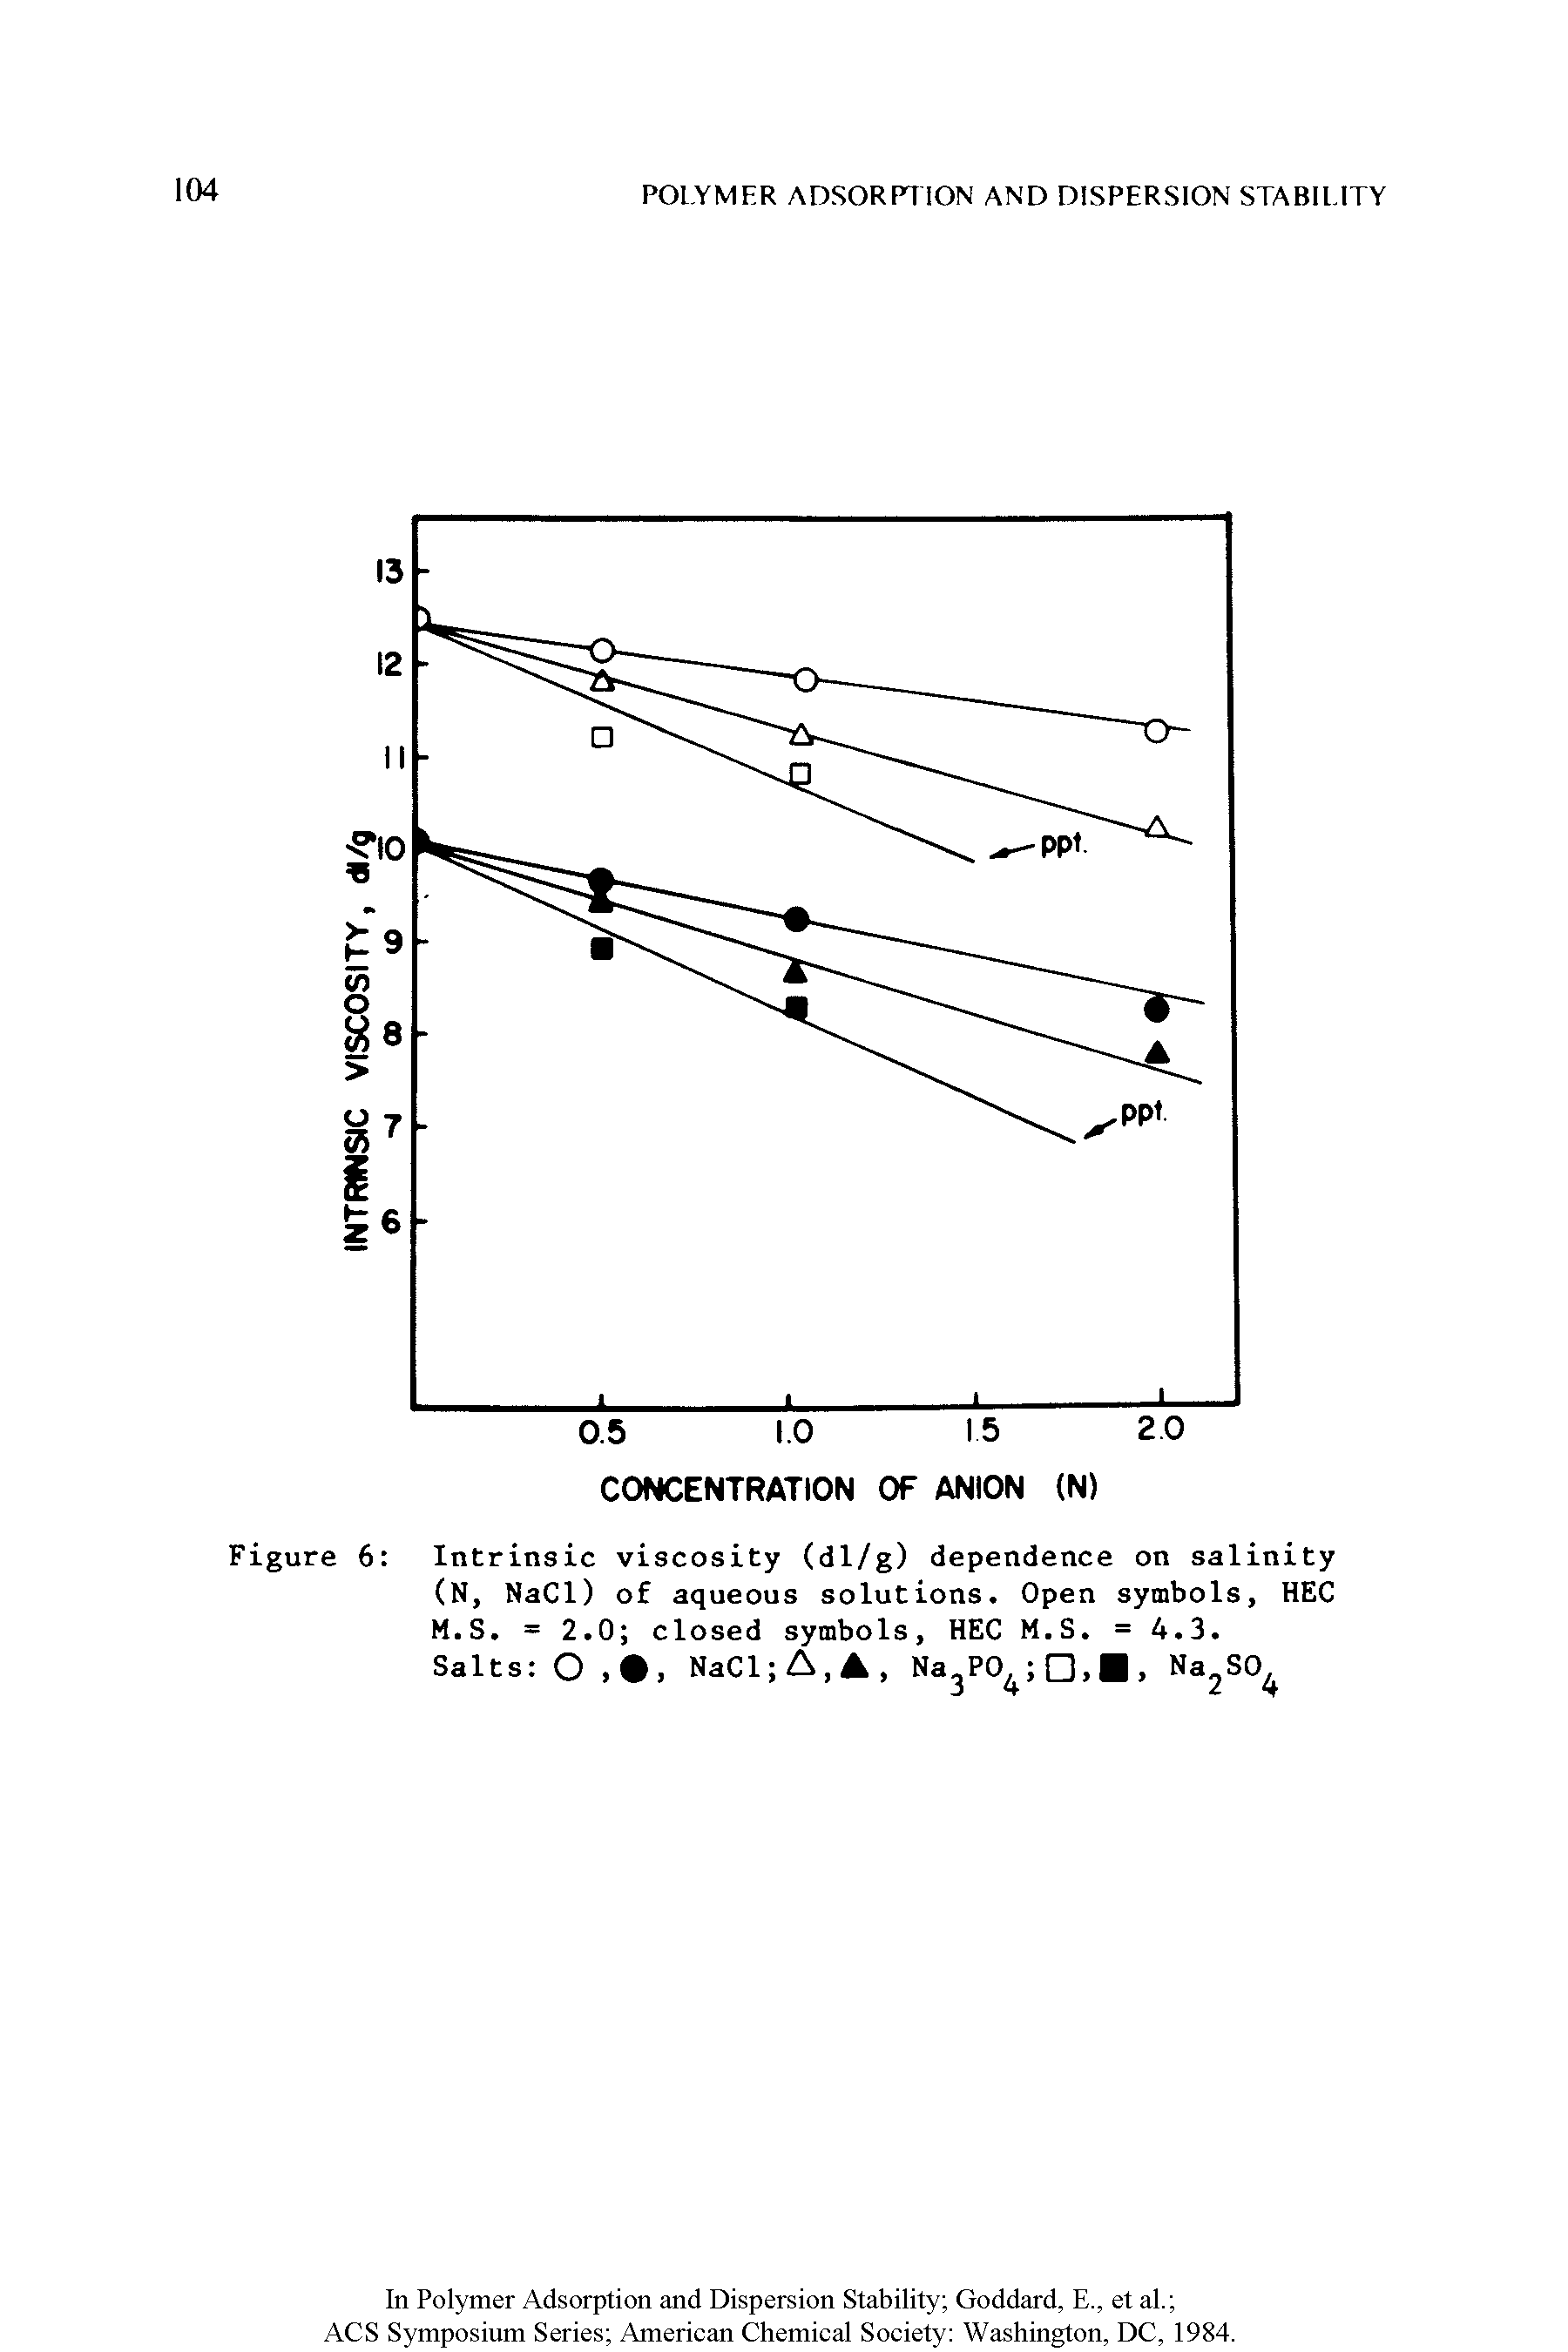 Figure 6 Intrinsic viscosity (dl/g) dependence on salinity (N, NaCl) of aqueous solutions. Open symbols, HEC M.S. = 2.0 closed symbols, HEC M.S. = 4.3.